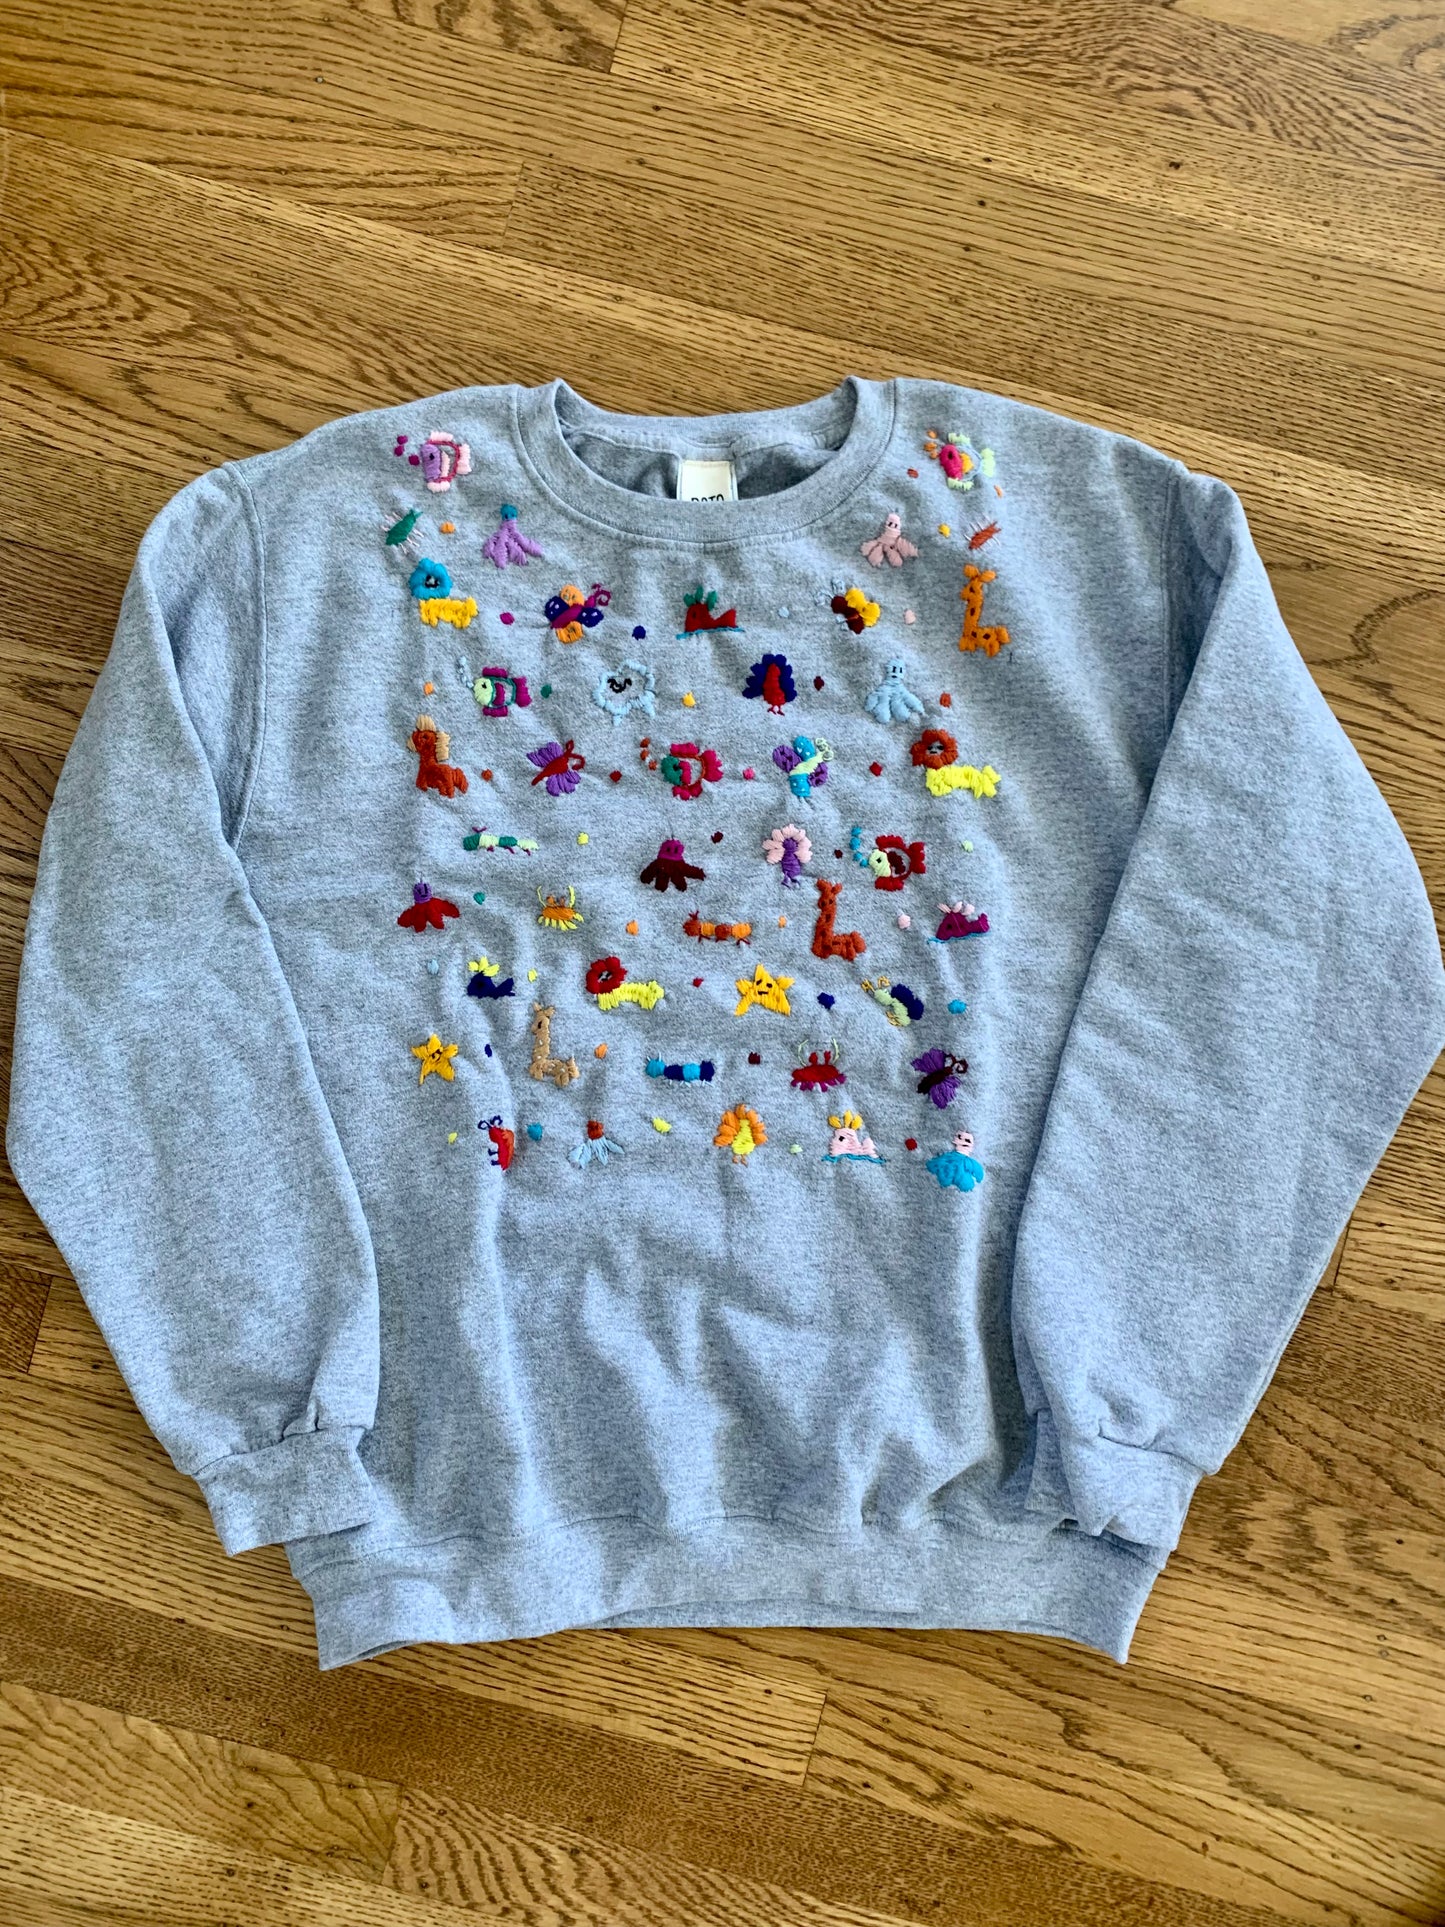 Adult hand embroidered animal sweatshirt